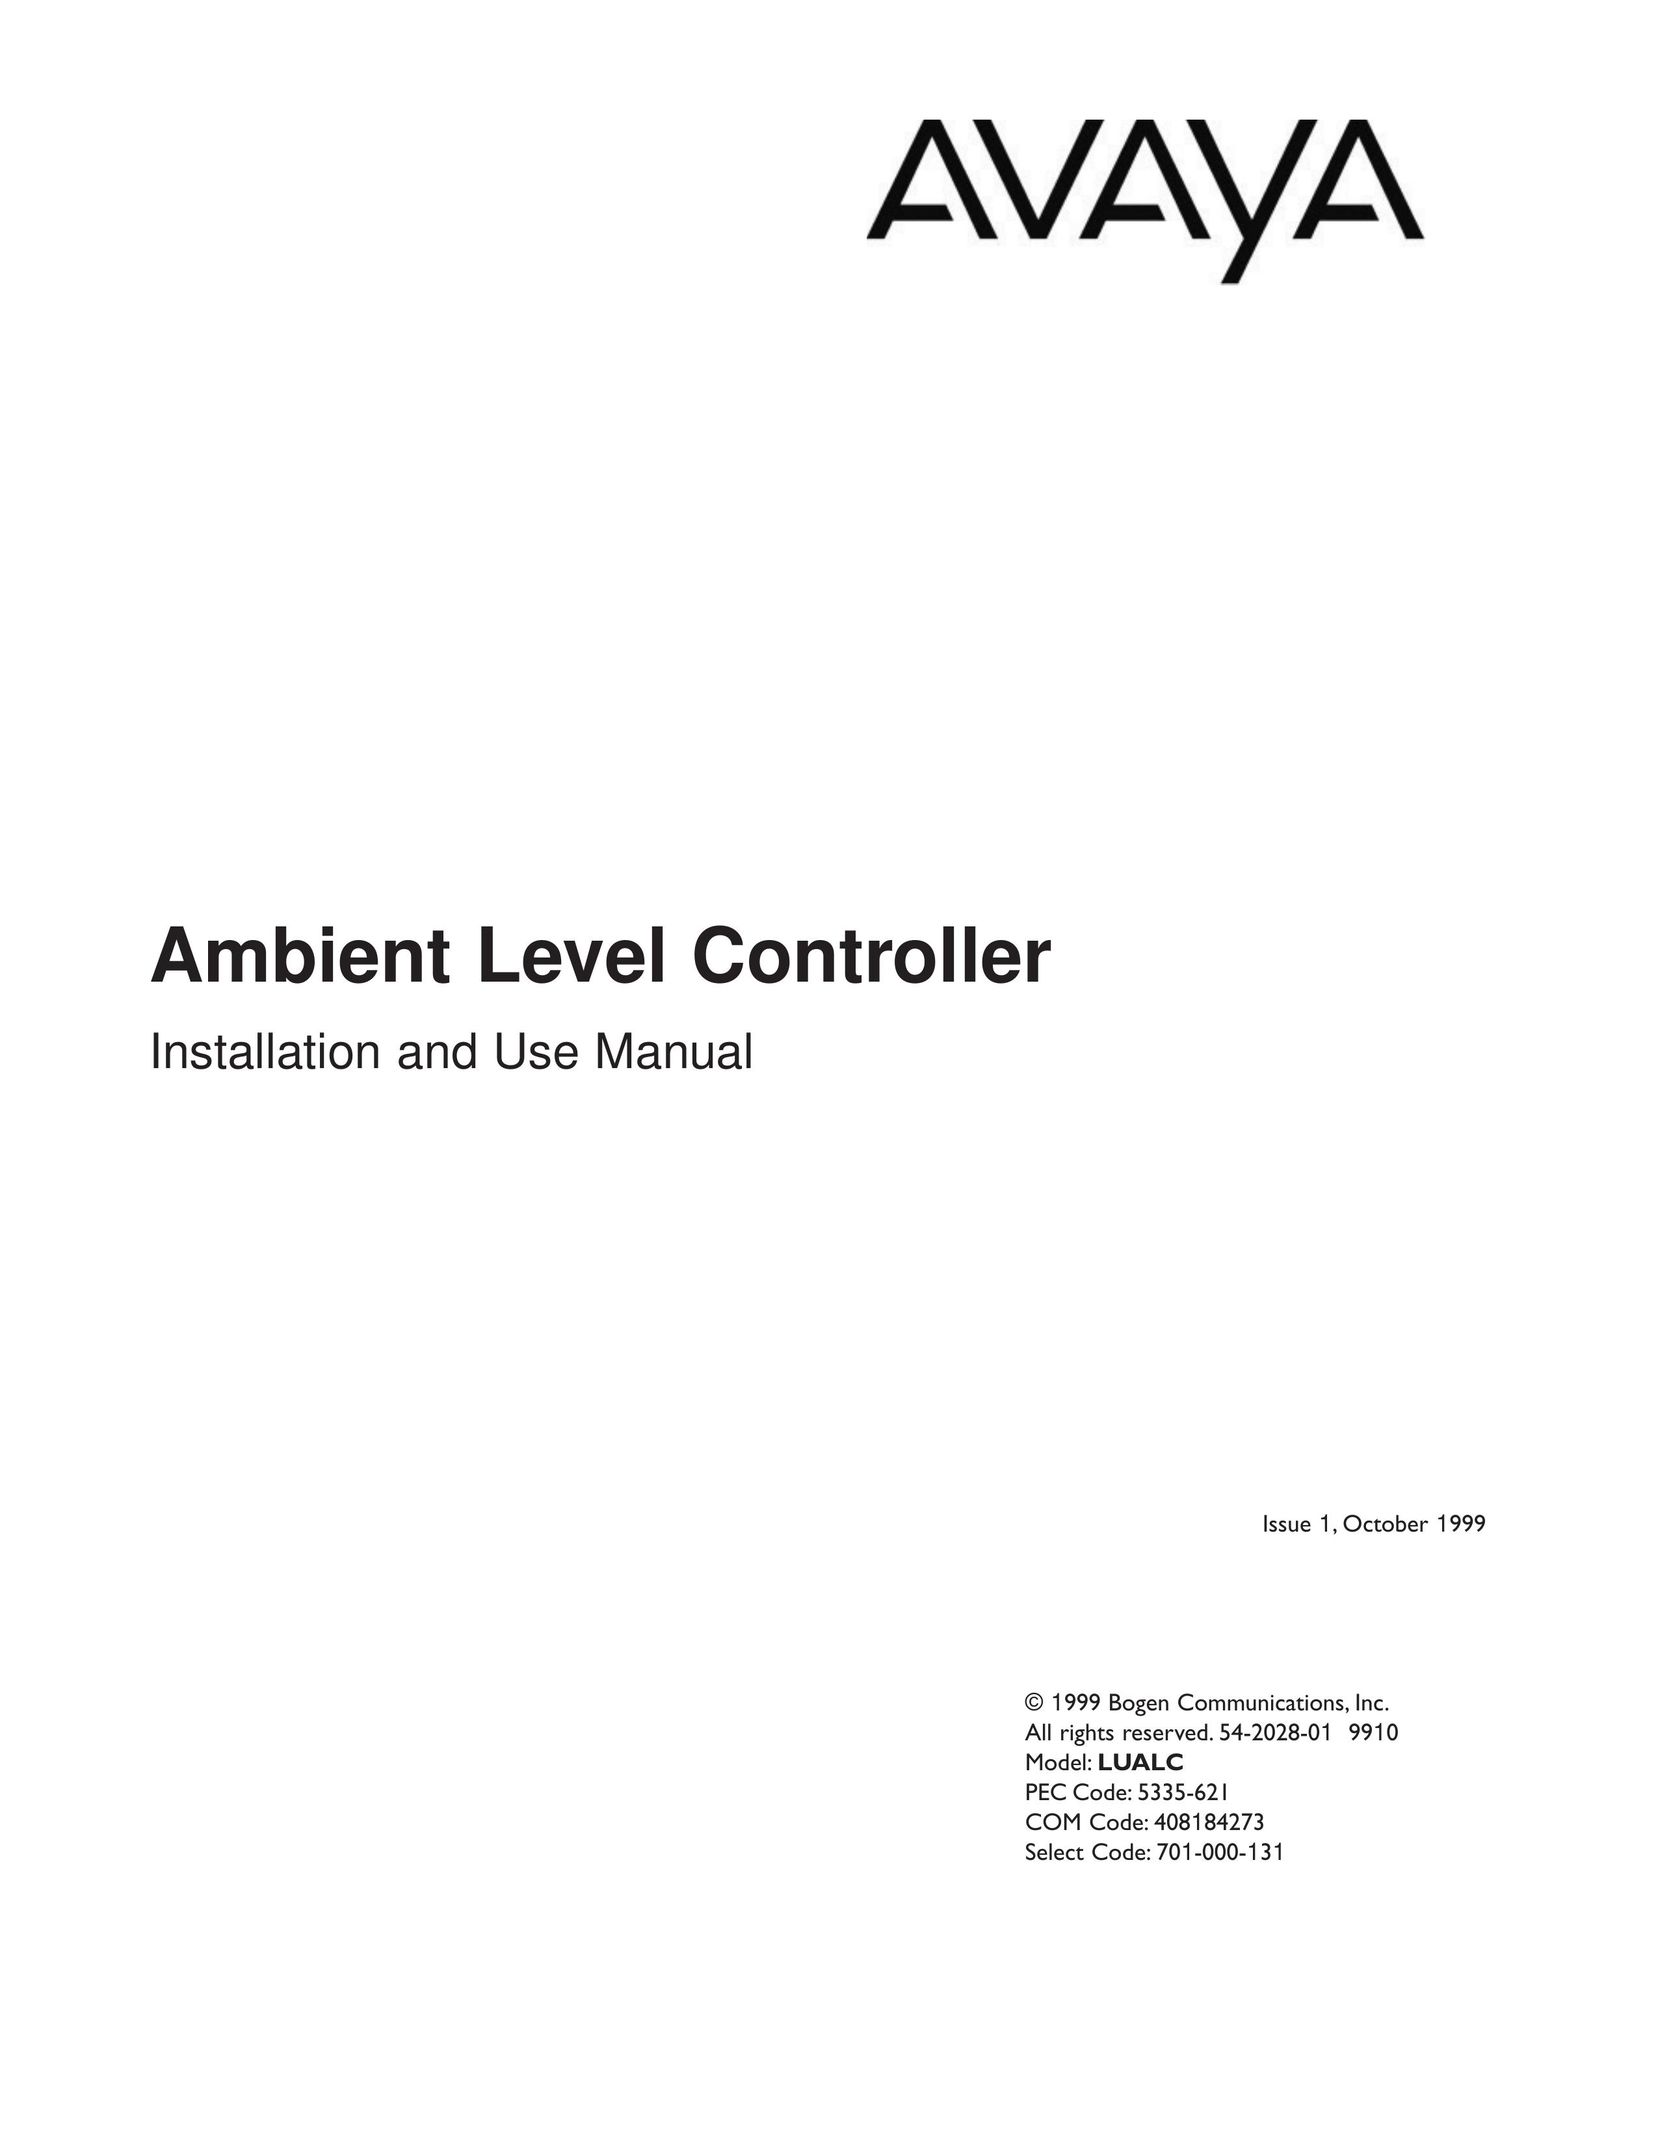 Avaya LUALC Video Game Controller User Manual